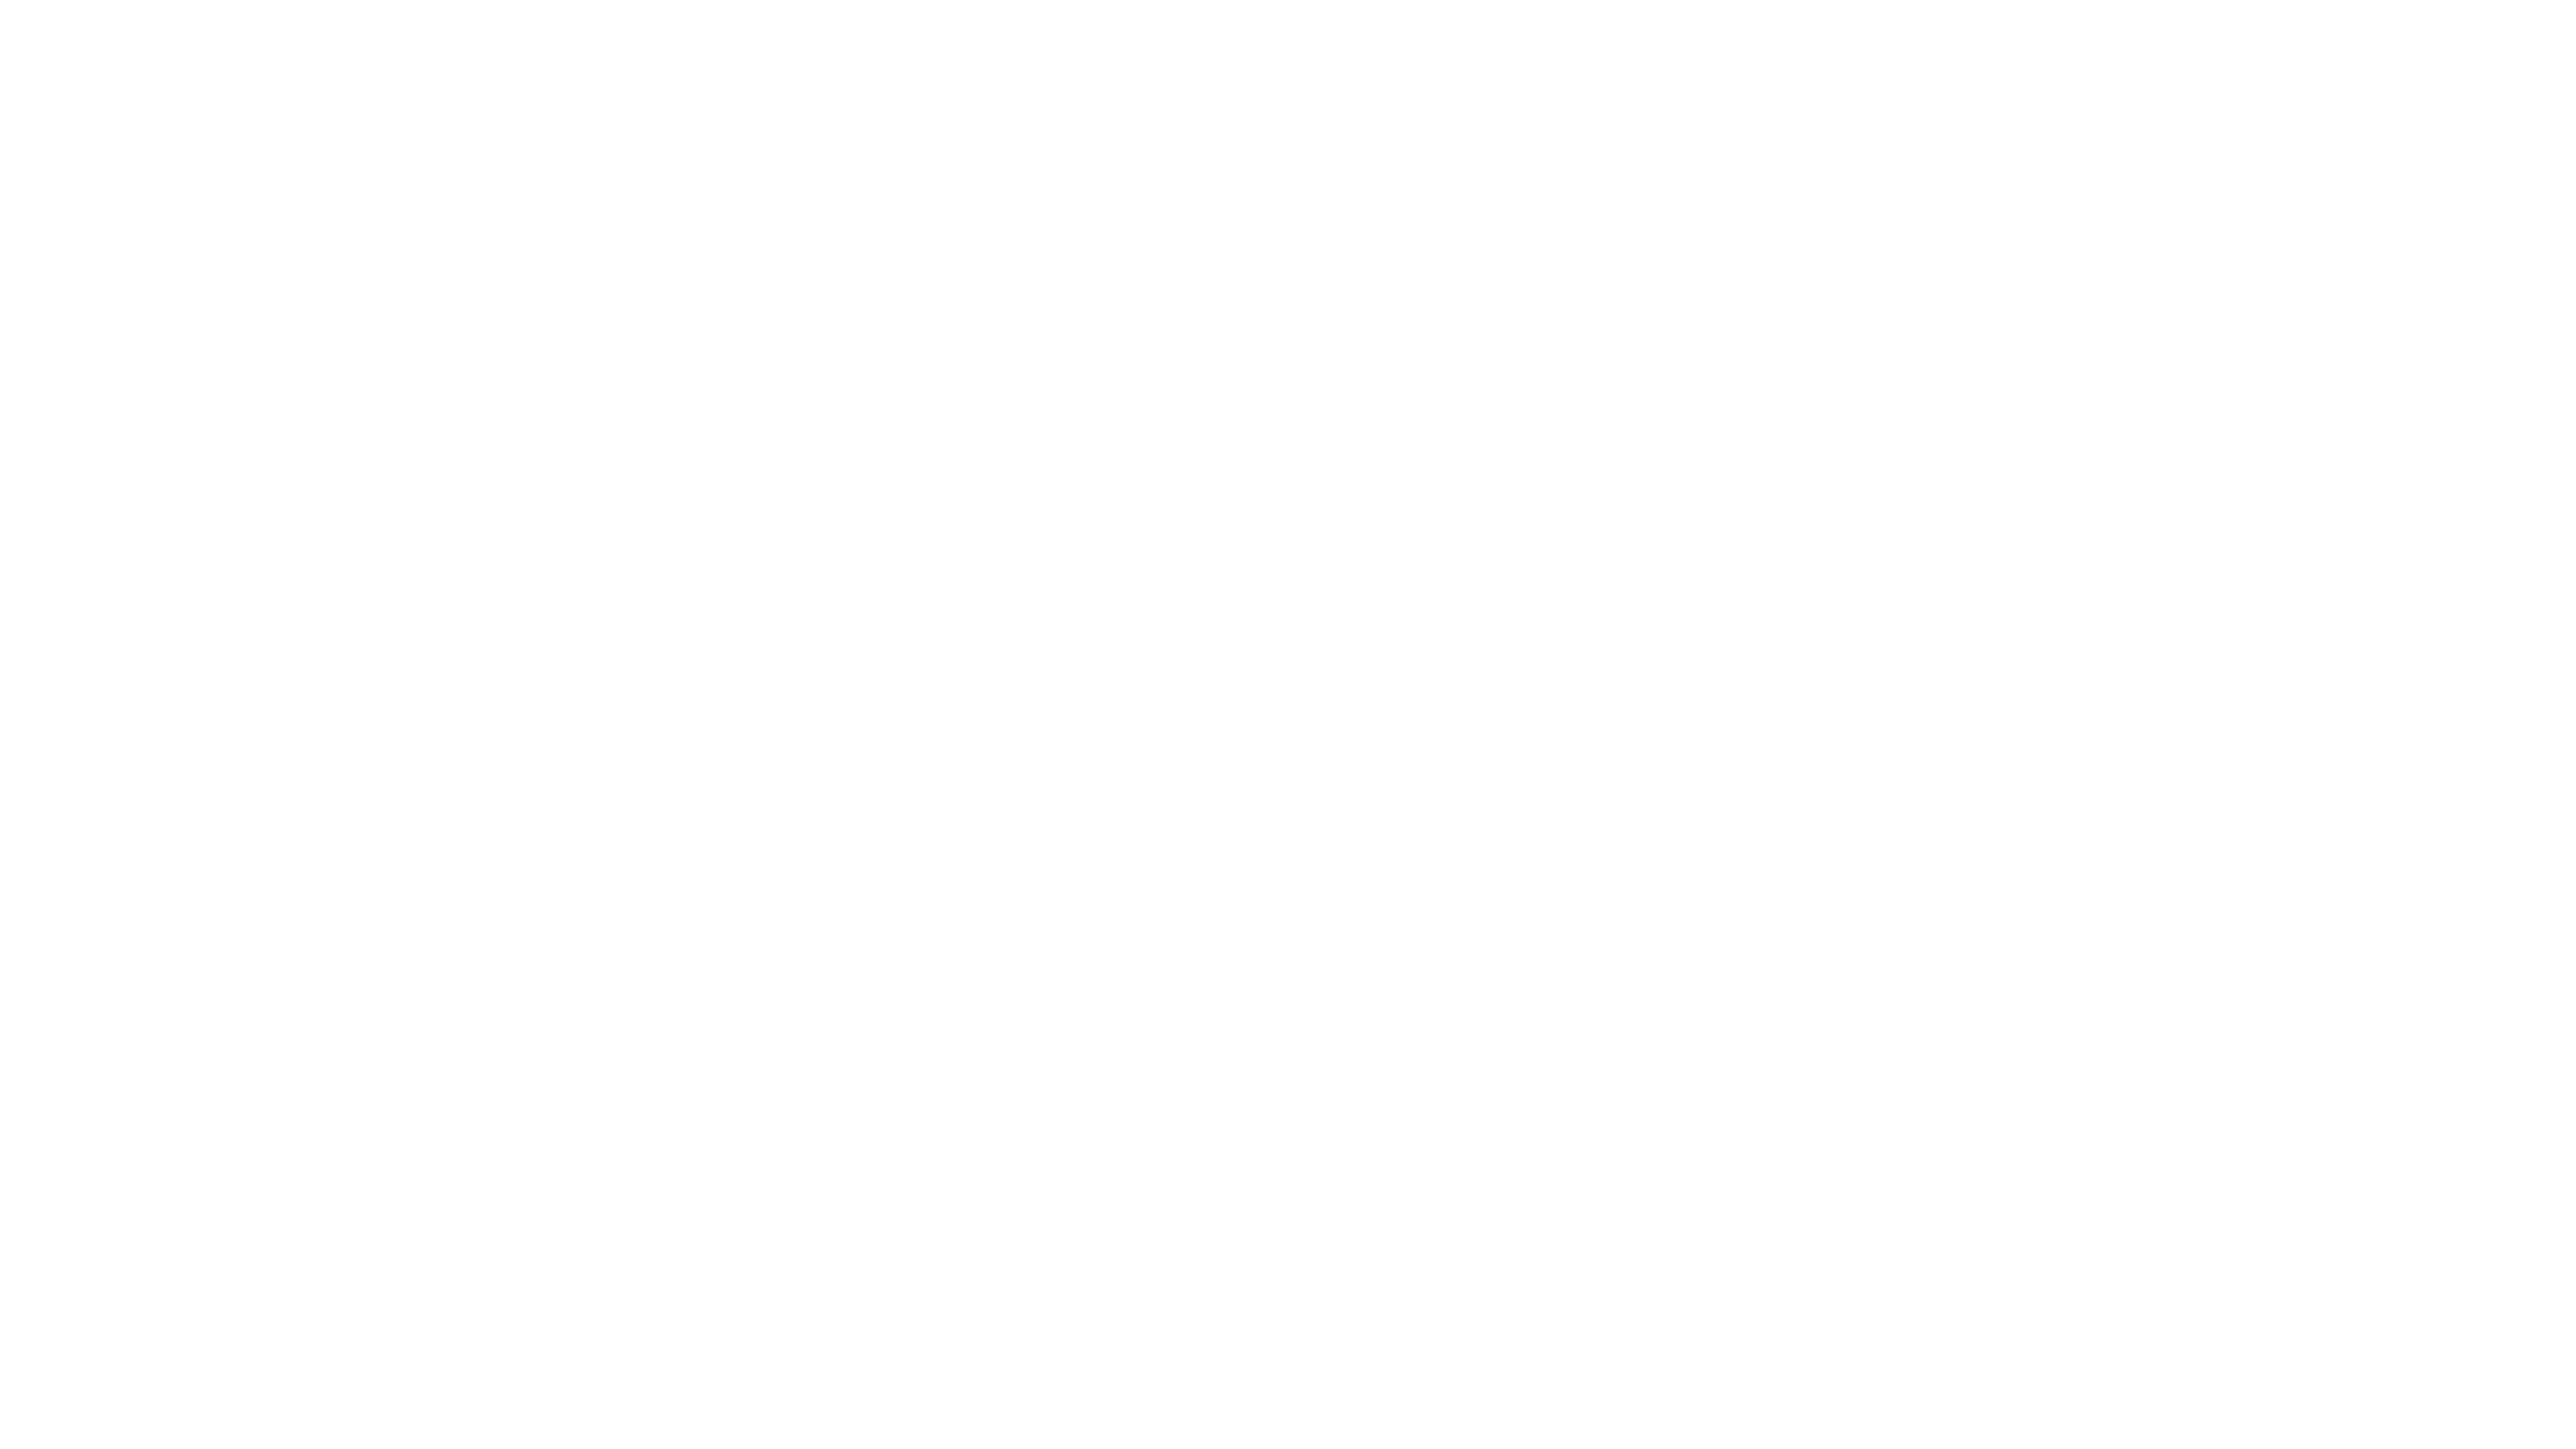 Previa Medical